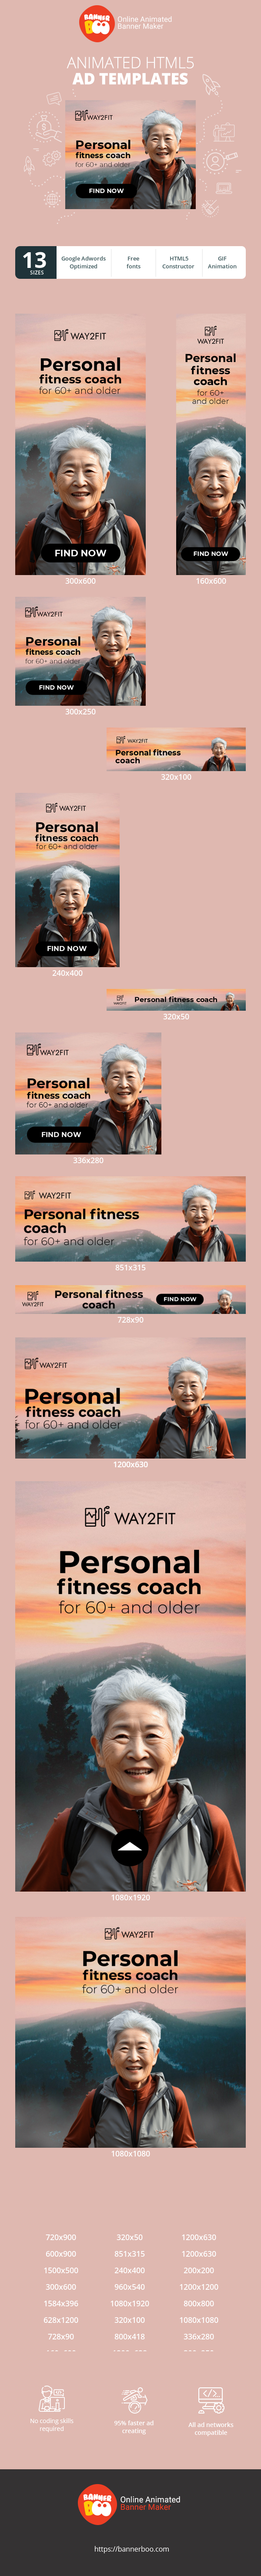 Шаблон рекламного банера — Personal Fitness Coach — For 60+ And Older